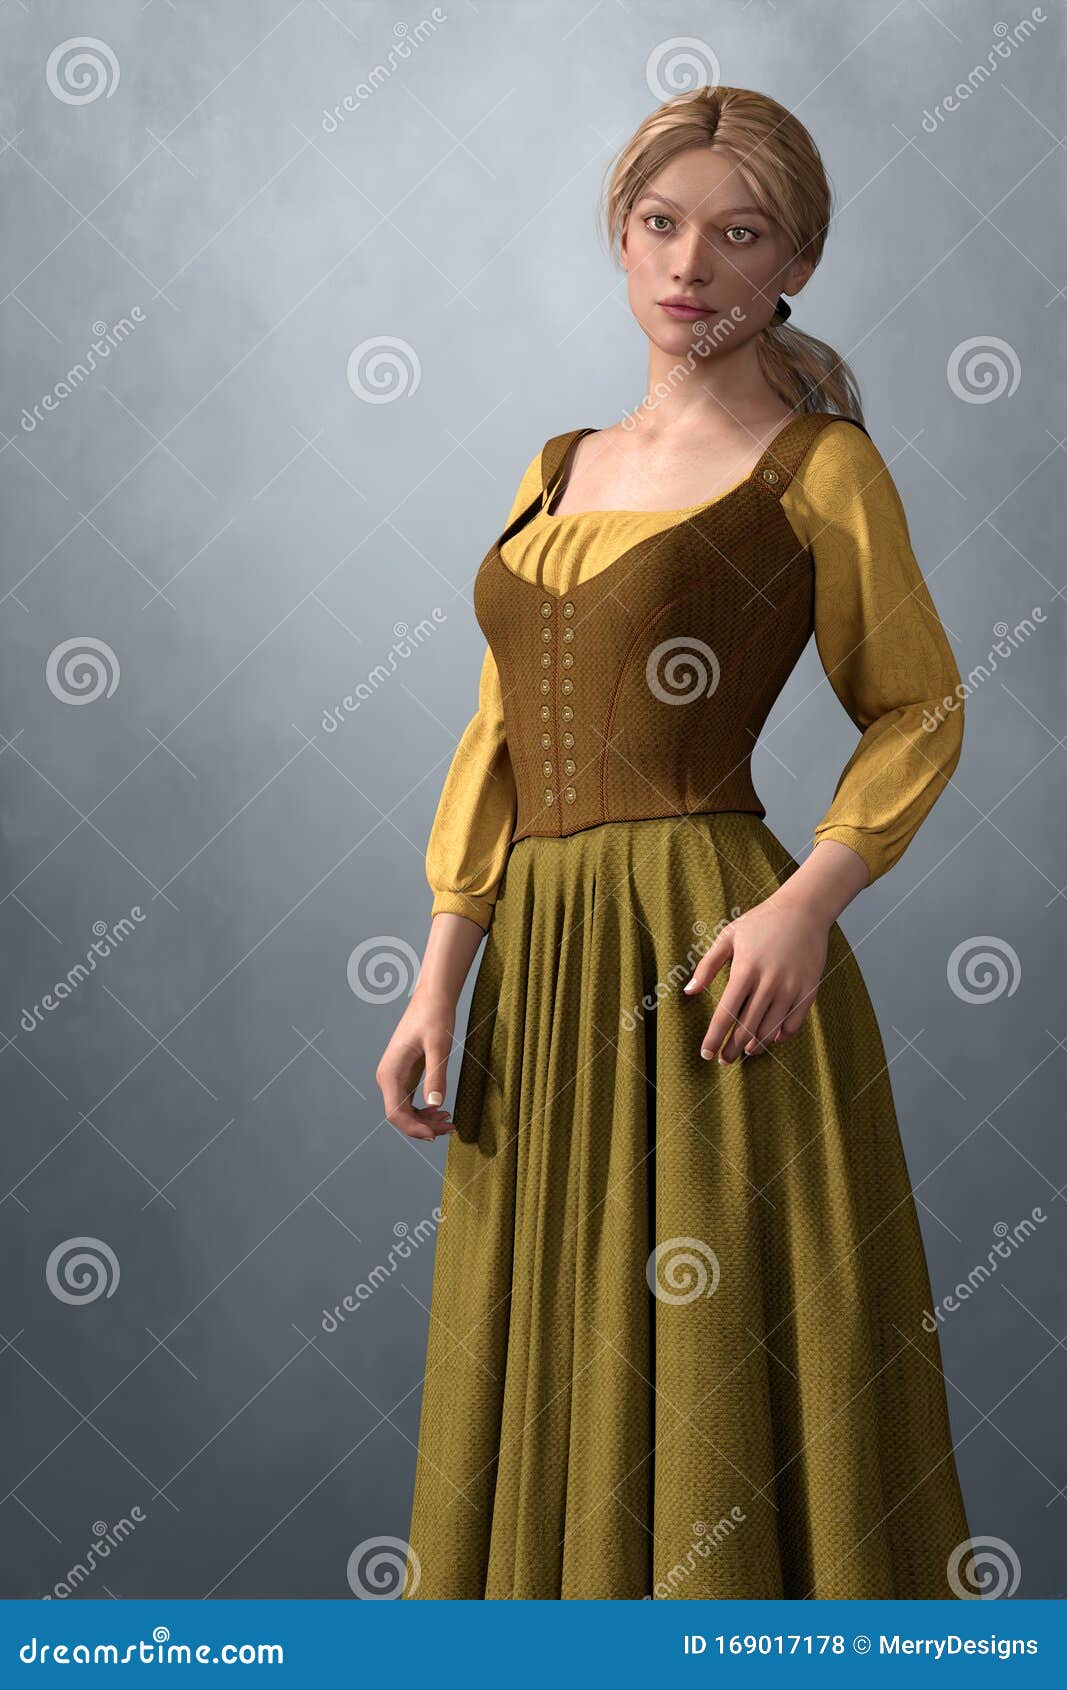 fantasy medieval clothing